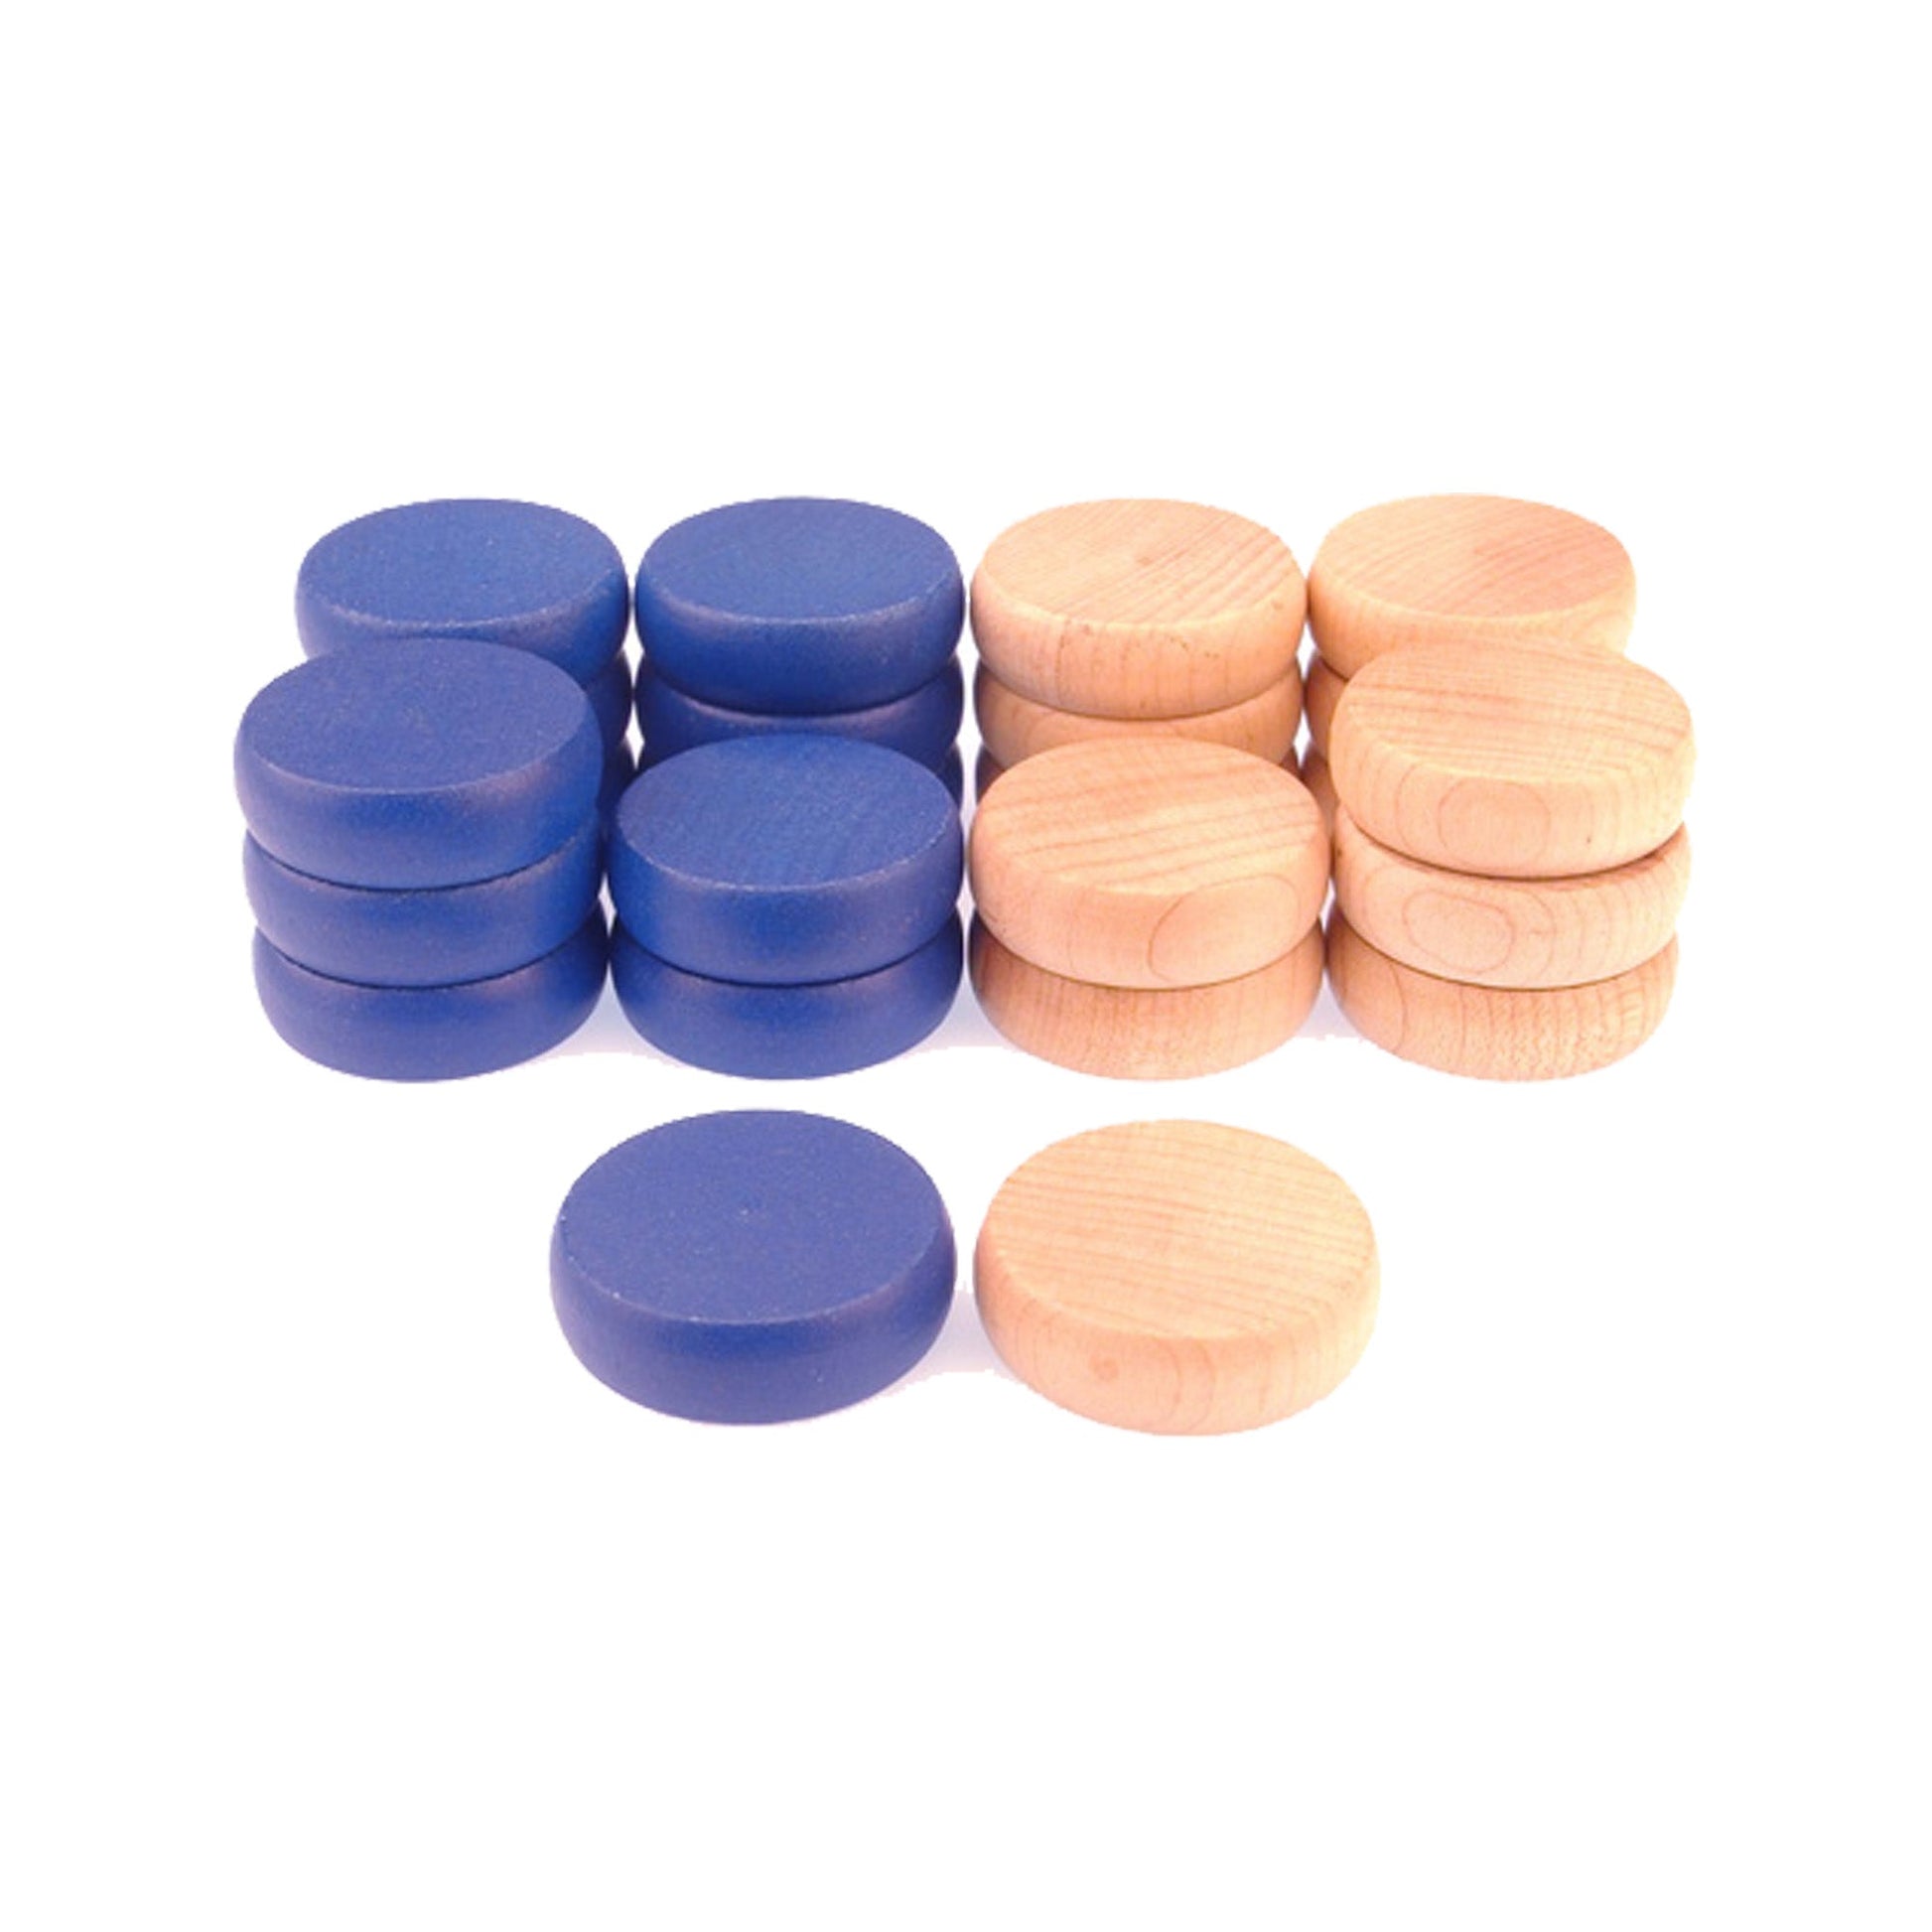 26-blue-clear crokinole tournament discs